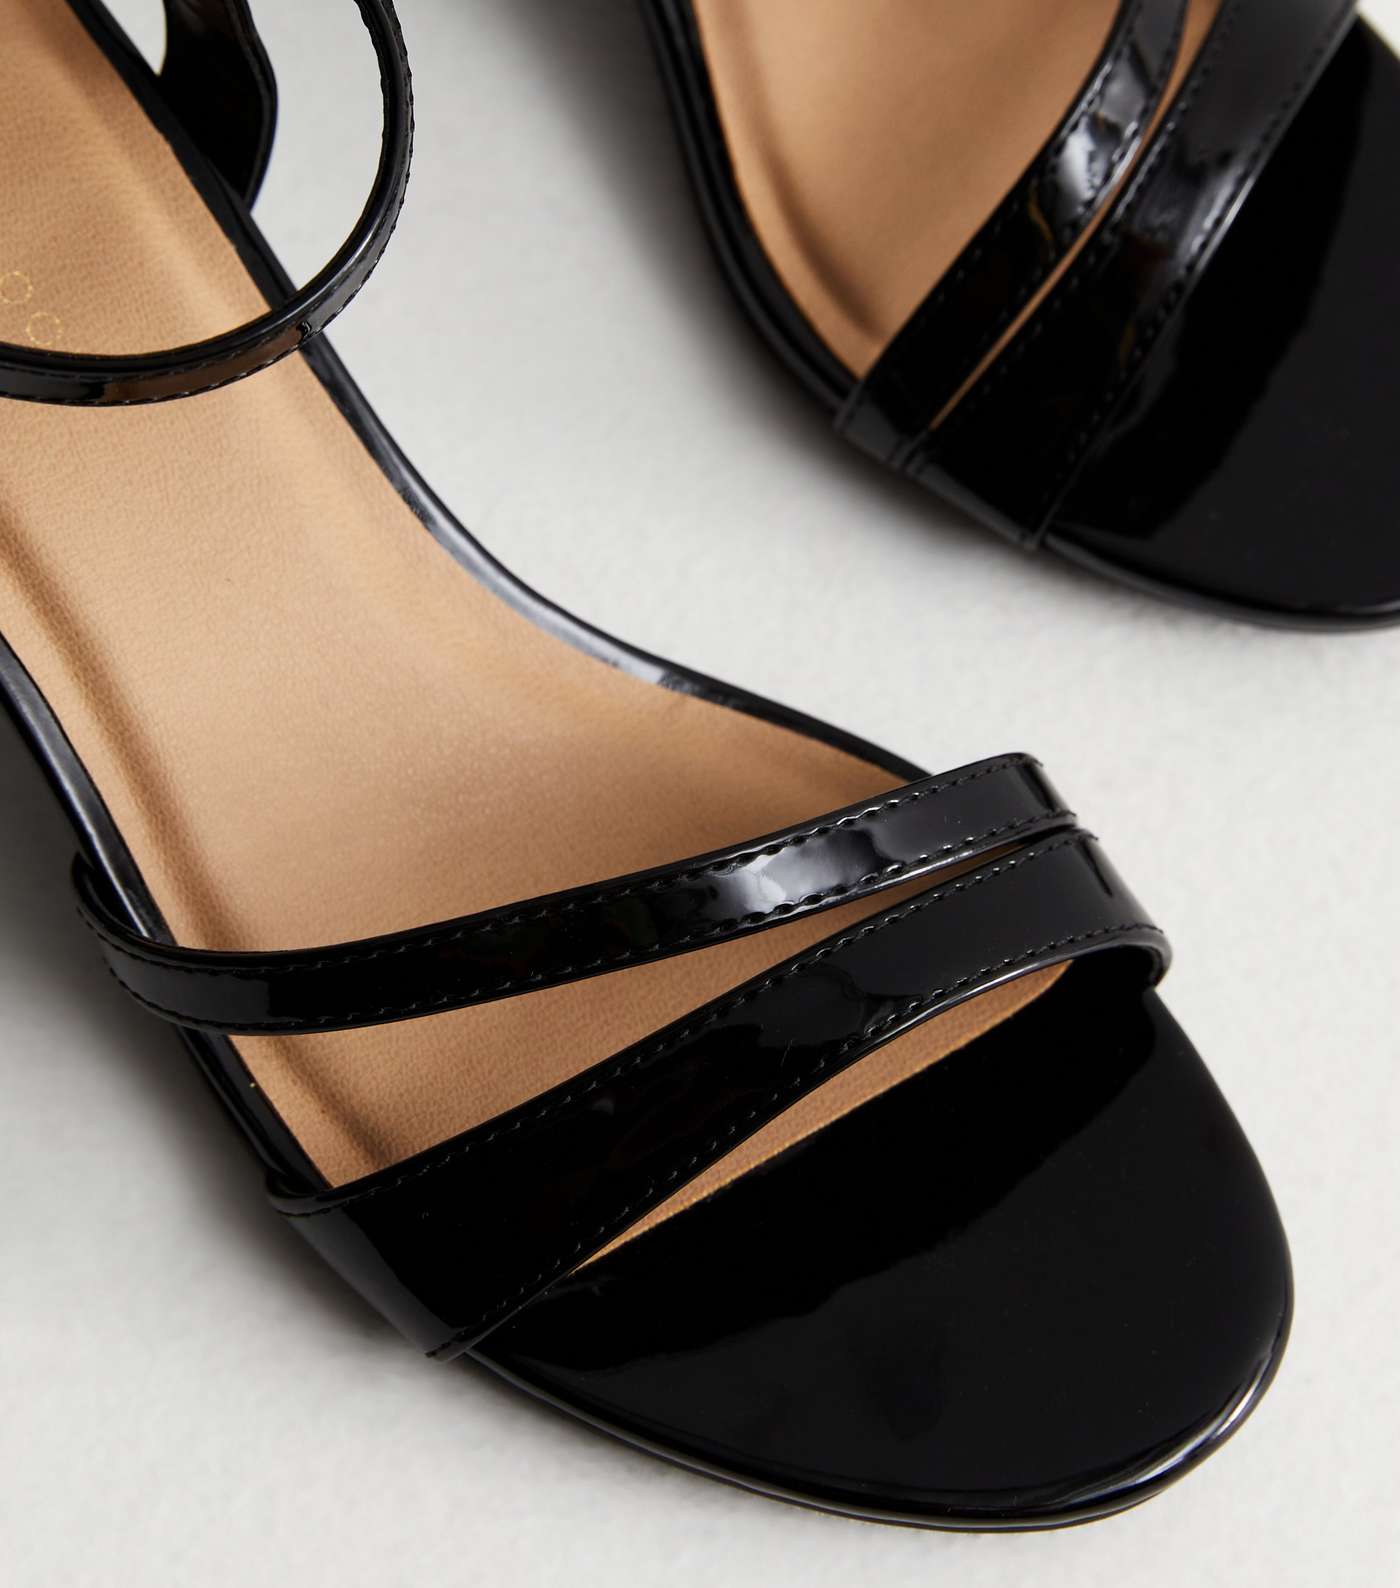 Black Patent Asymmetric Low Block Heel Sandals Image 3